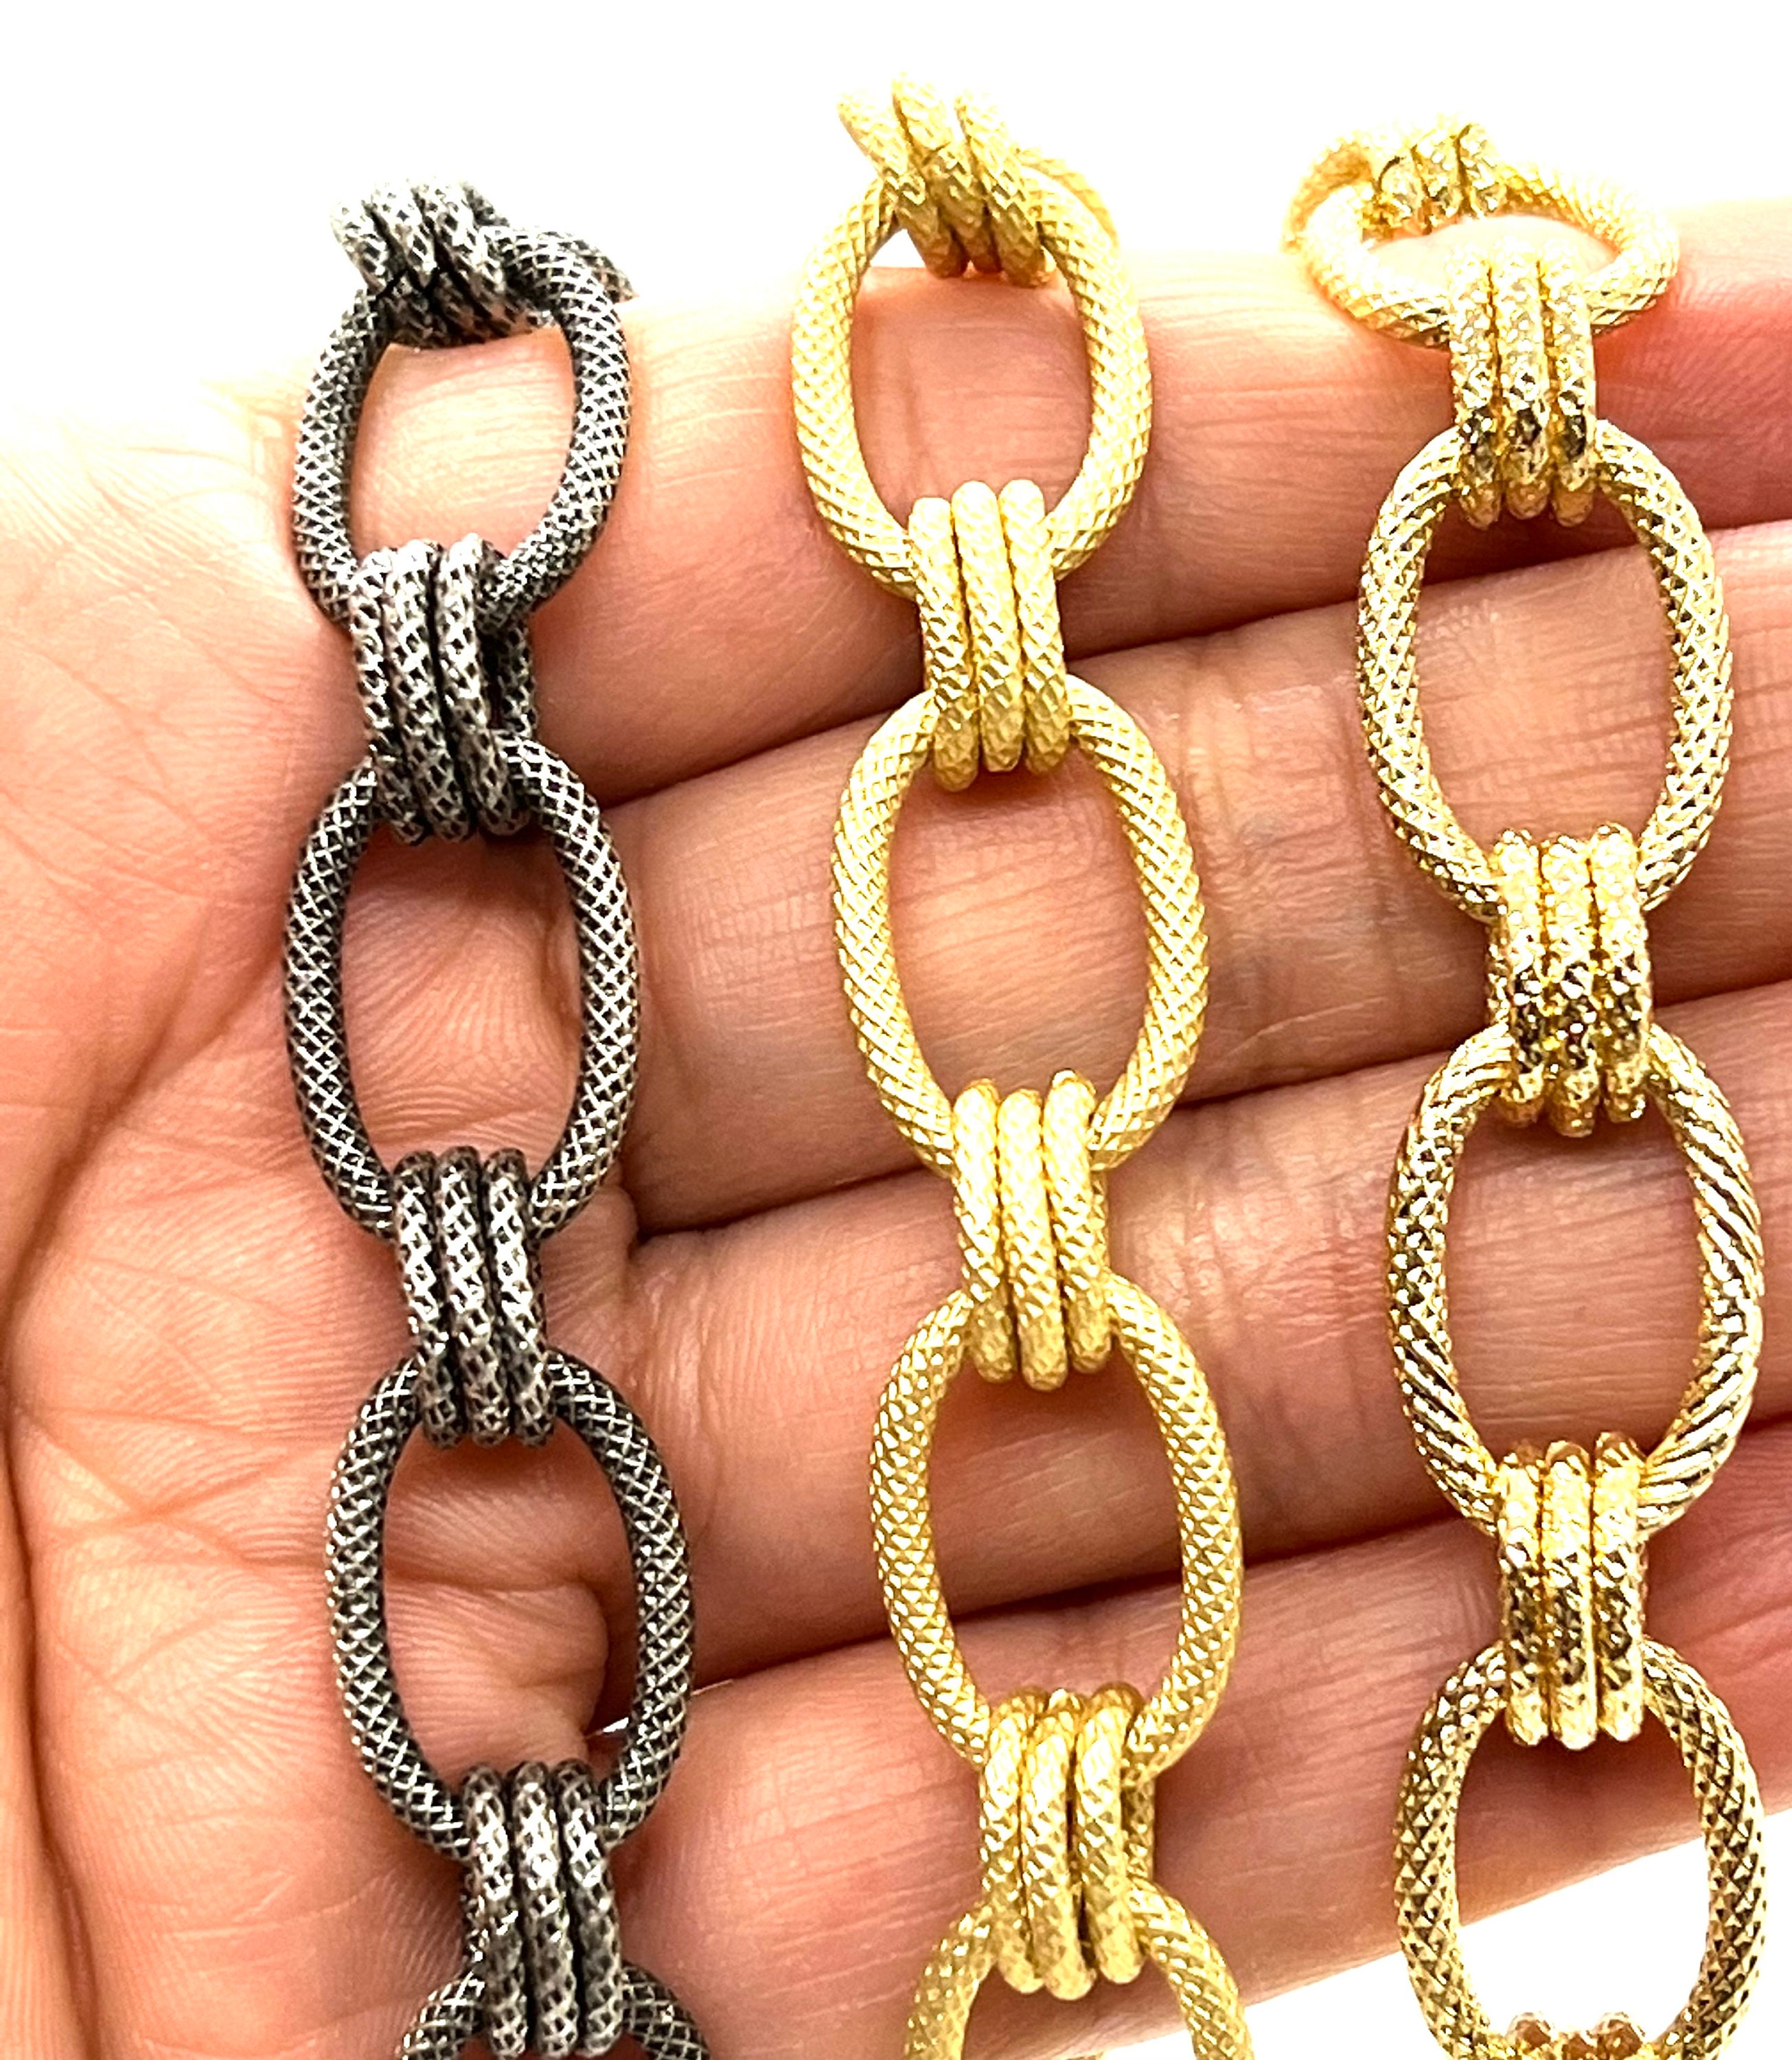 24k Gold Color Covering Extensions or Matt Finish Gold Bracelet